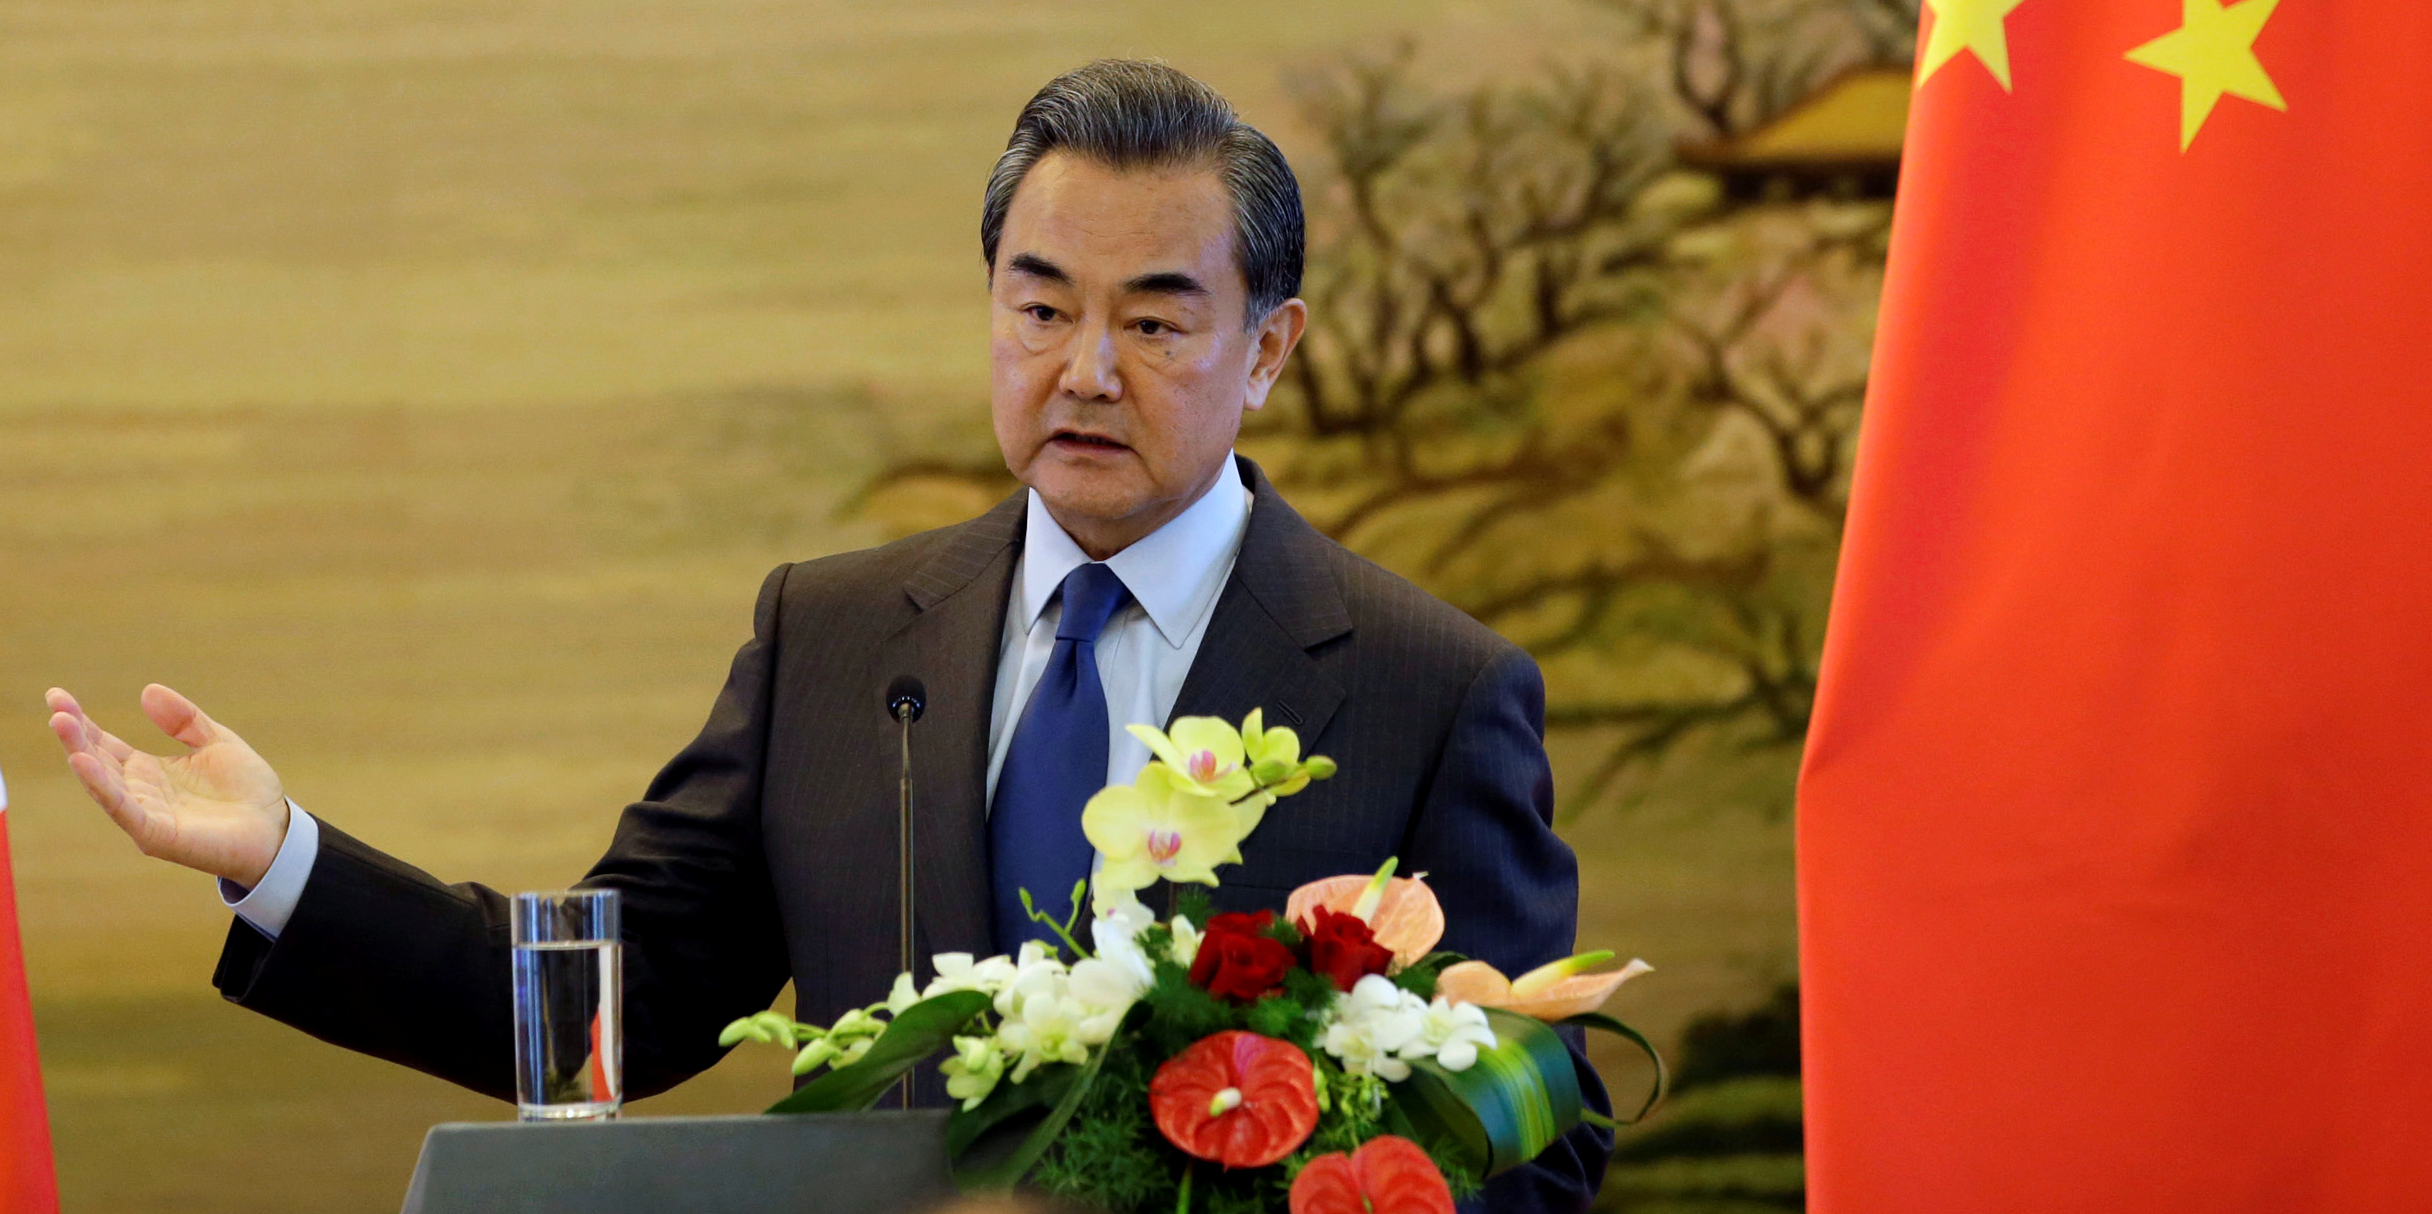 wang-yi-chine-pekin-france-ministre-des-affaires-etrangeres-jean-marc-ayrault-protectionnisme-commerce-reciprocite-investissements-etrangers